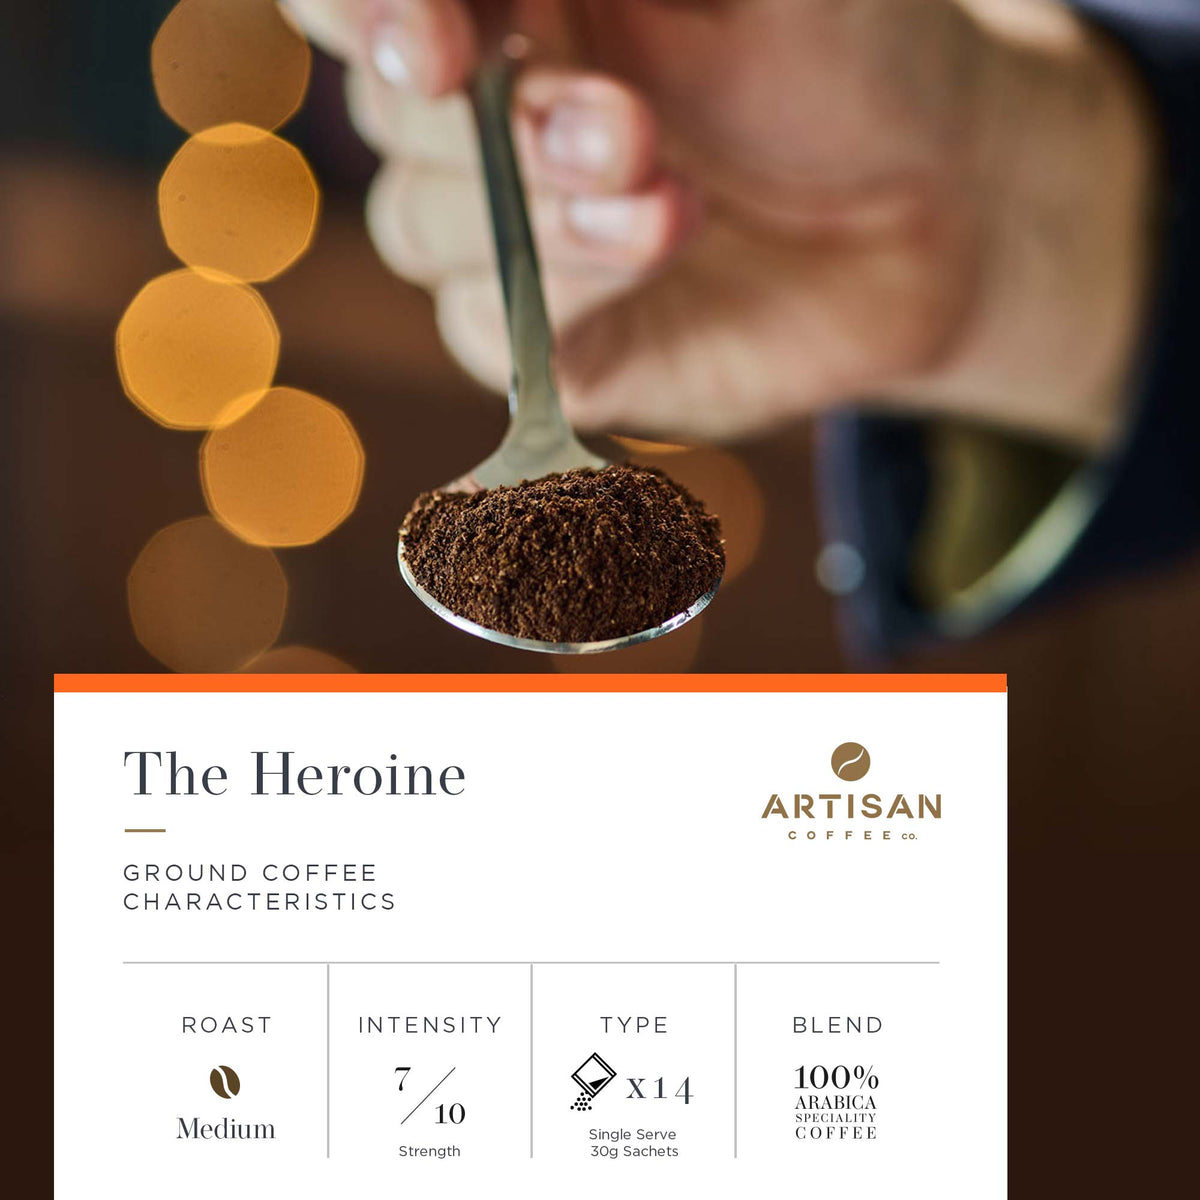 Artisan Coffee Co The Heroine ground coffee Infographic characteristics